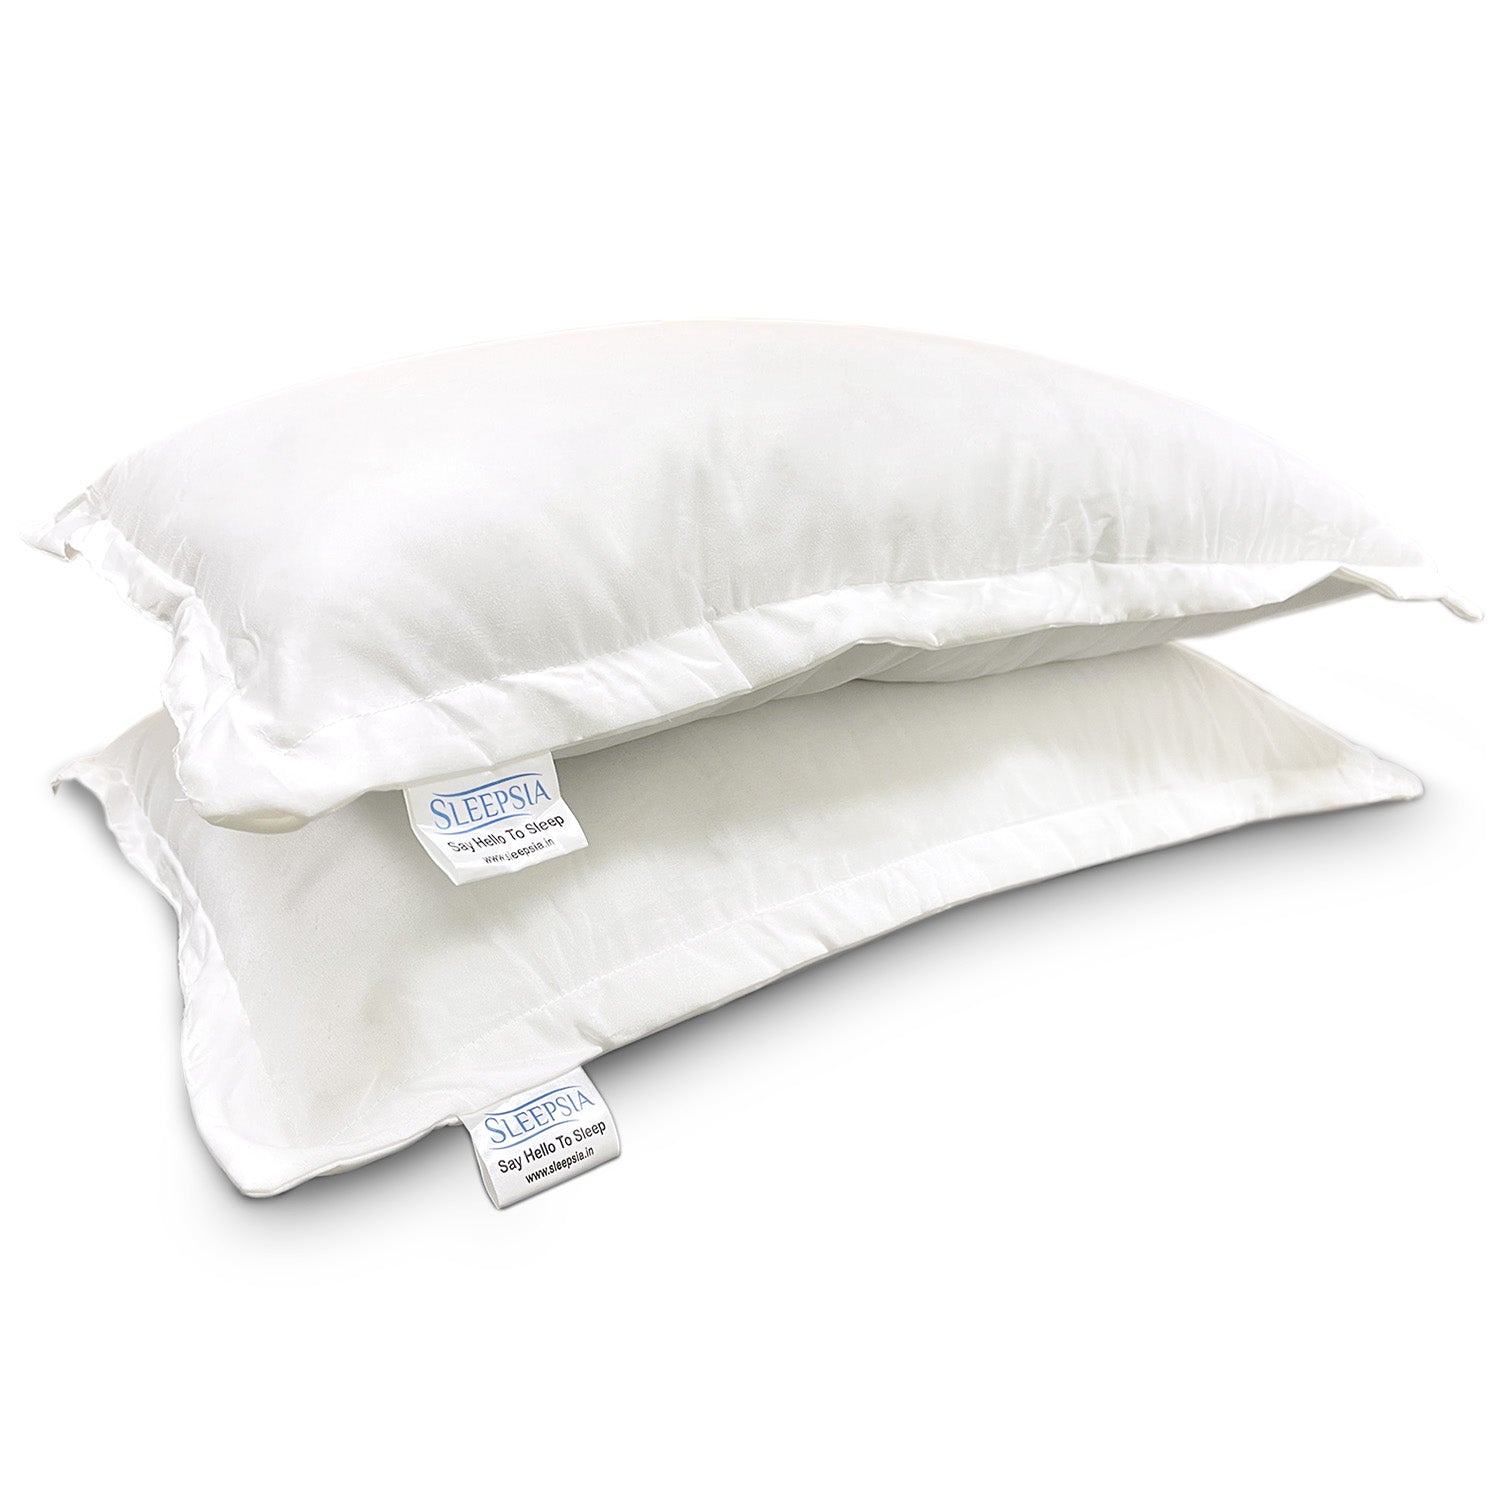 Sleepsia Hotel Flenge Microfiber Bed Pillow